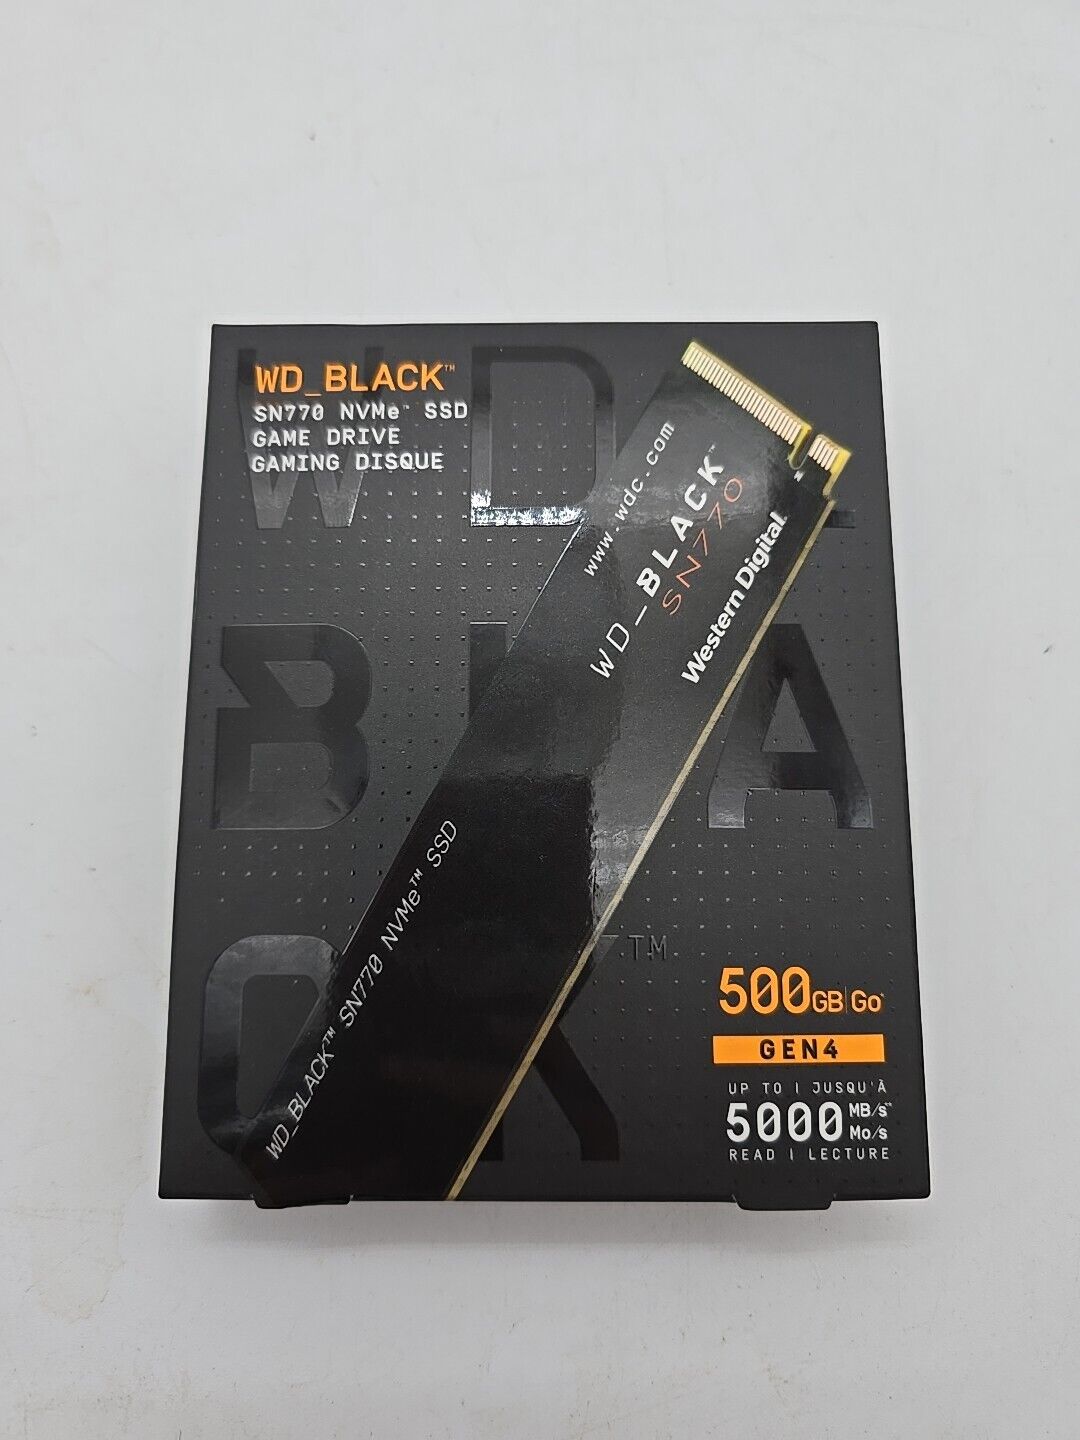 New WD Black SN770 NVMe SSD Game Drive Gen4 500GB (WDBBDL5000ANC-WRWM) READ